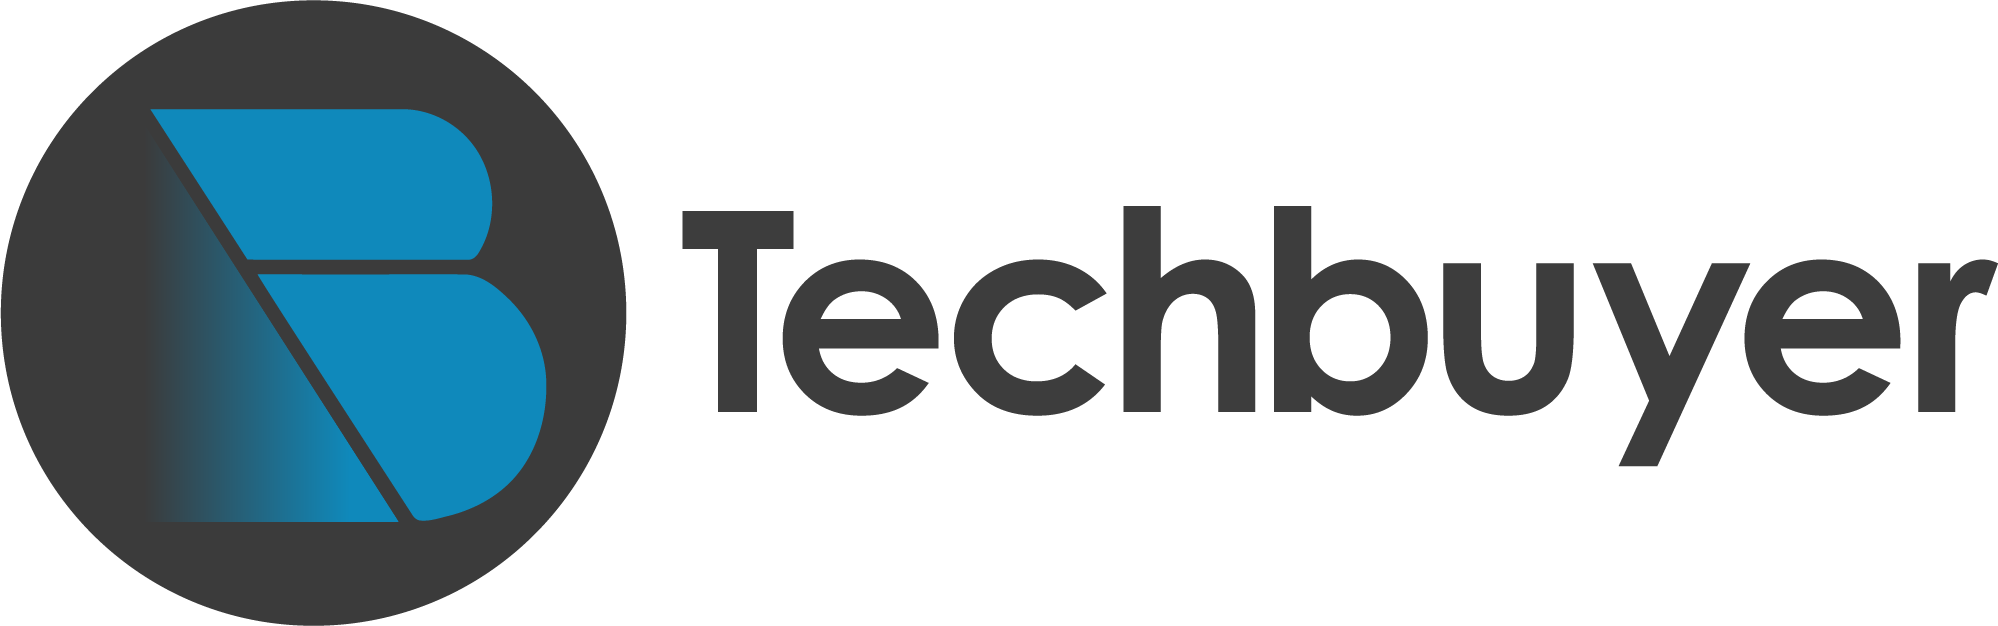 Techbuyer Helps Bridging Tech Narrow the Digital Divide